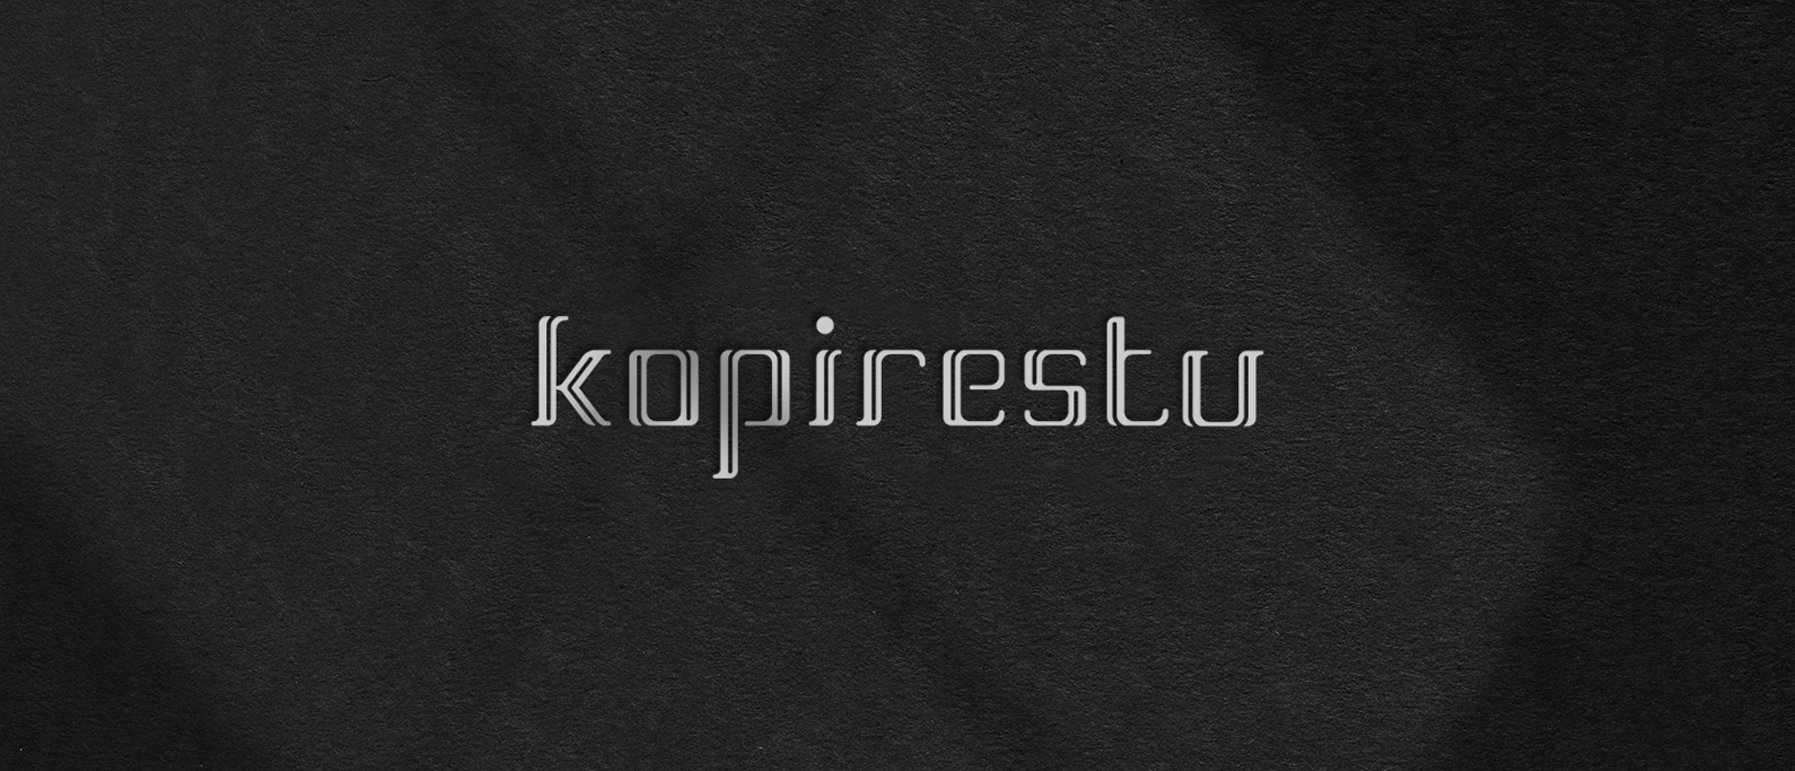 kopirestu logo black background